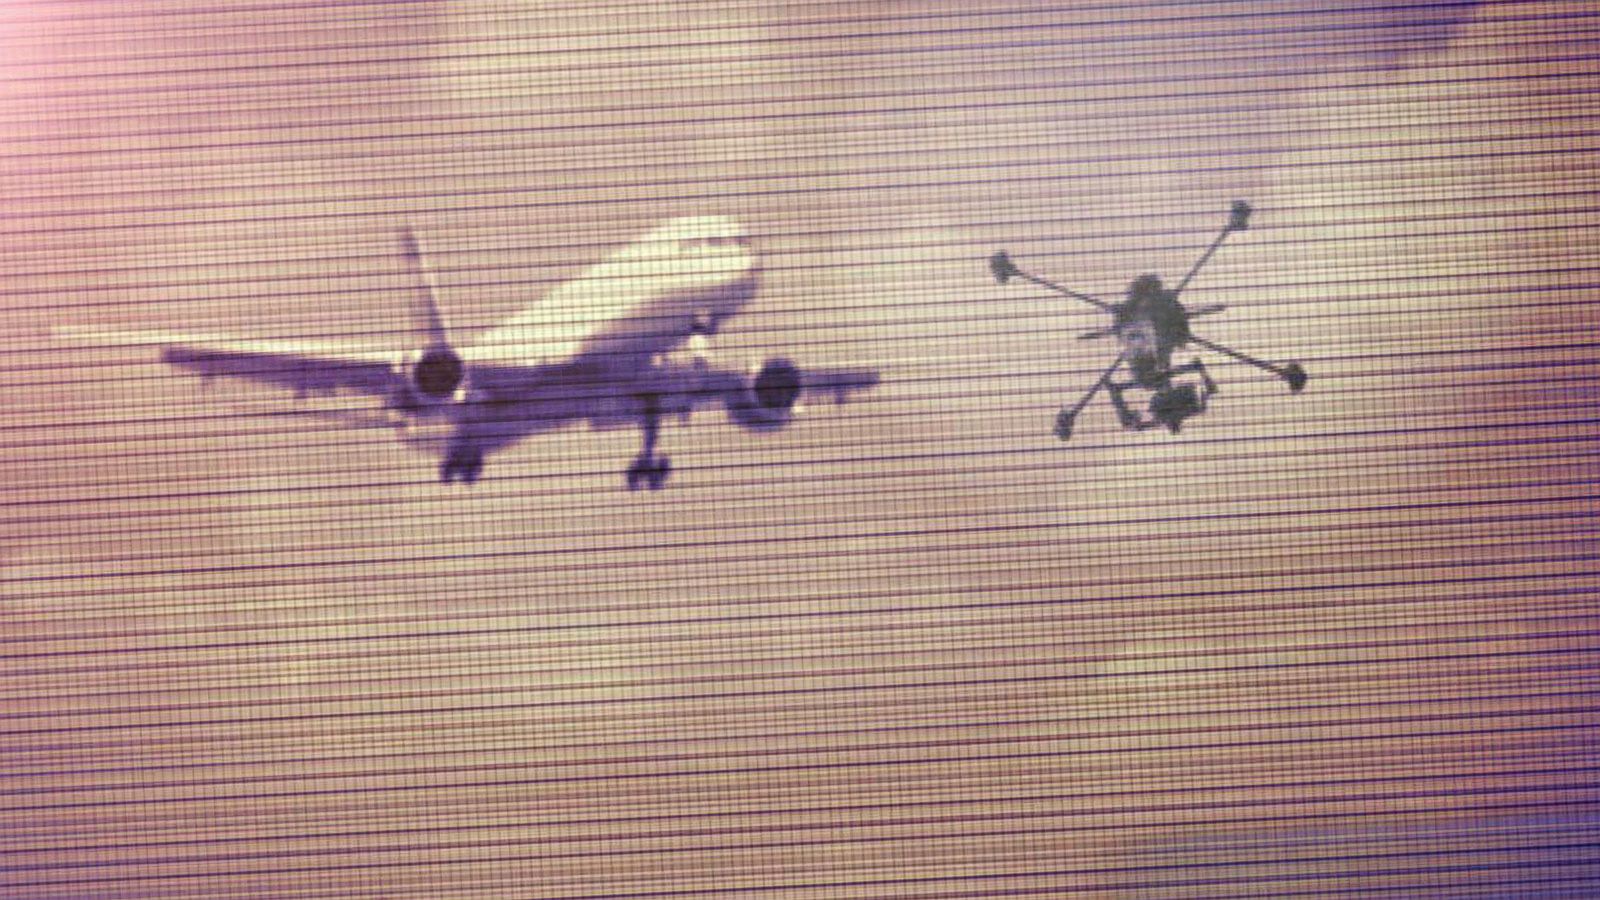 Flying my life. Drone crash. June 10, 1990 British Airways Flight 111.